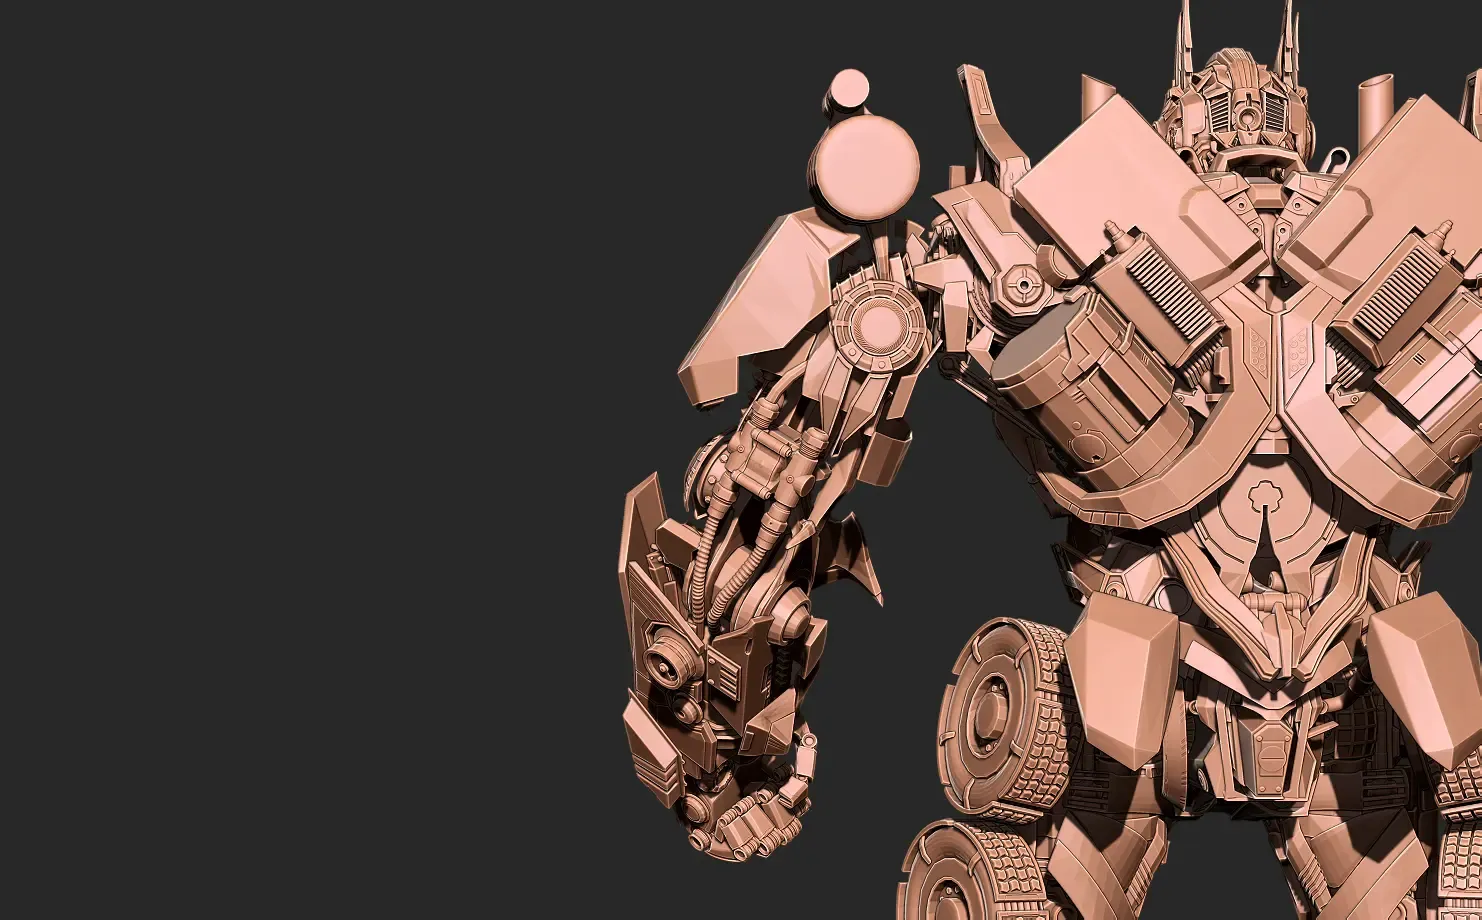 Optimus Prime - Transformer 3D print model